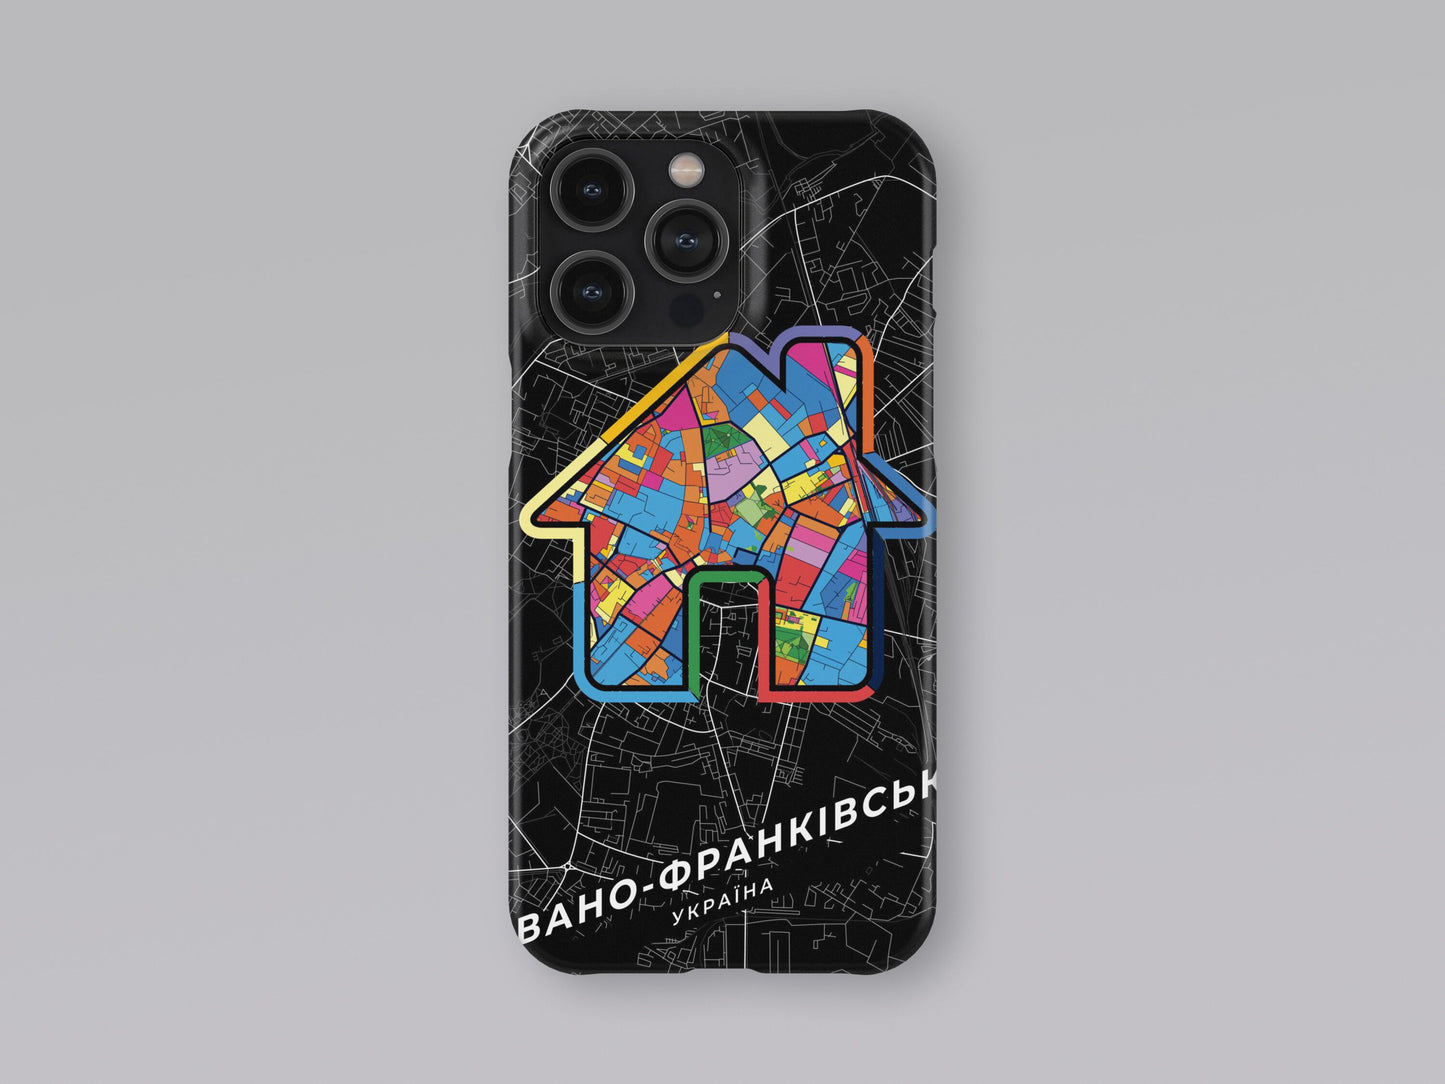 Ivano-Frankivsk Ukraine slim phone case with colorful icon. Birthday, wedding or housewarming gift. Couple match cases. 3